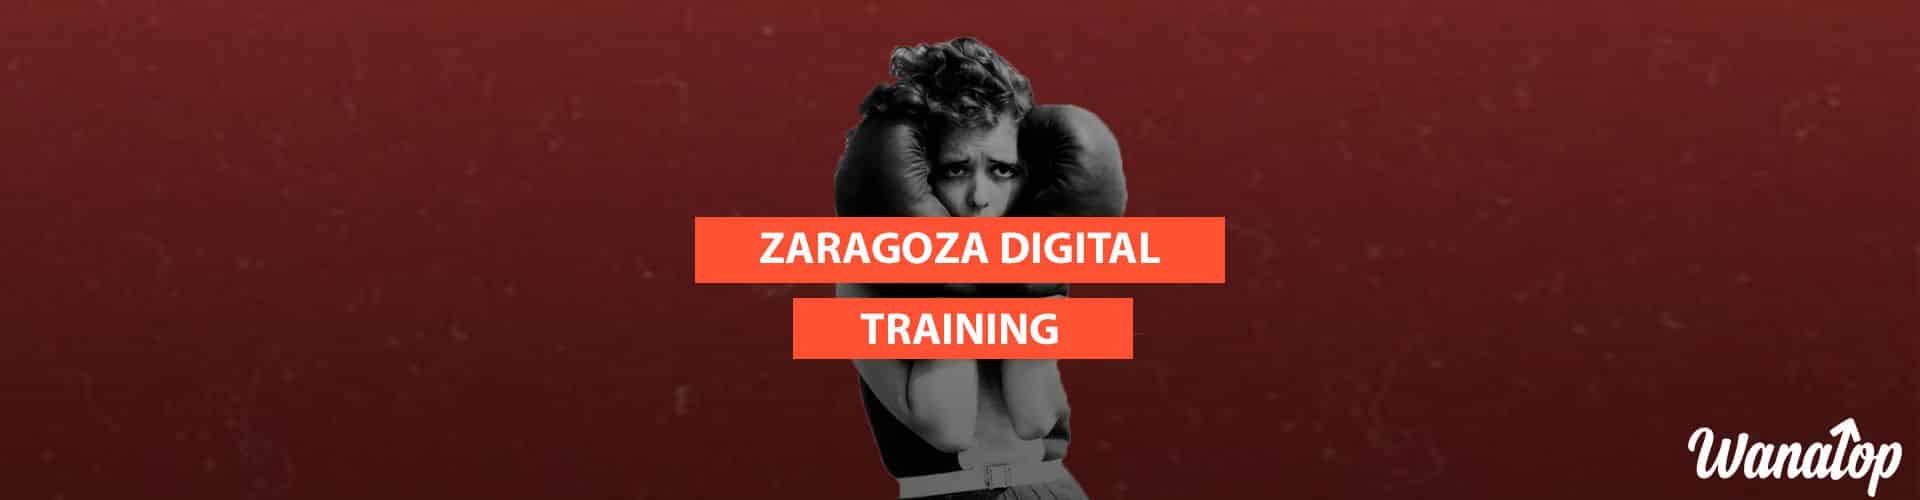 Entrénate y digitaliza tu empresa: Únete al Zaragoza Digital Training